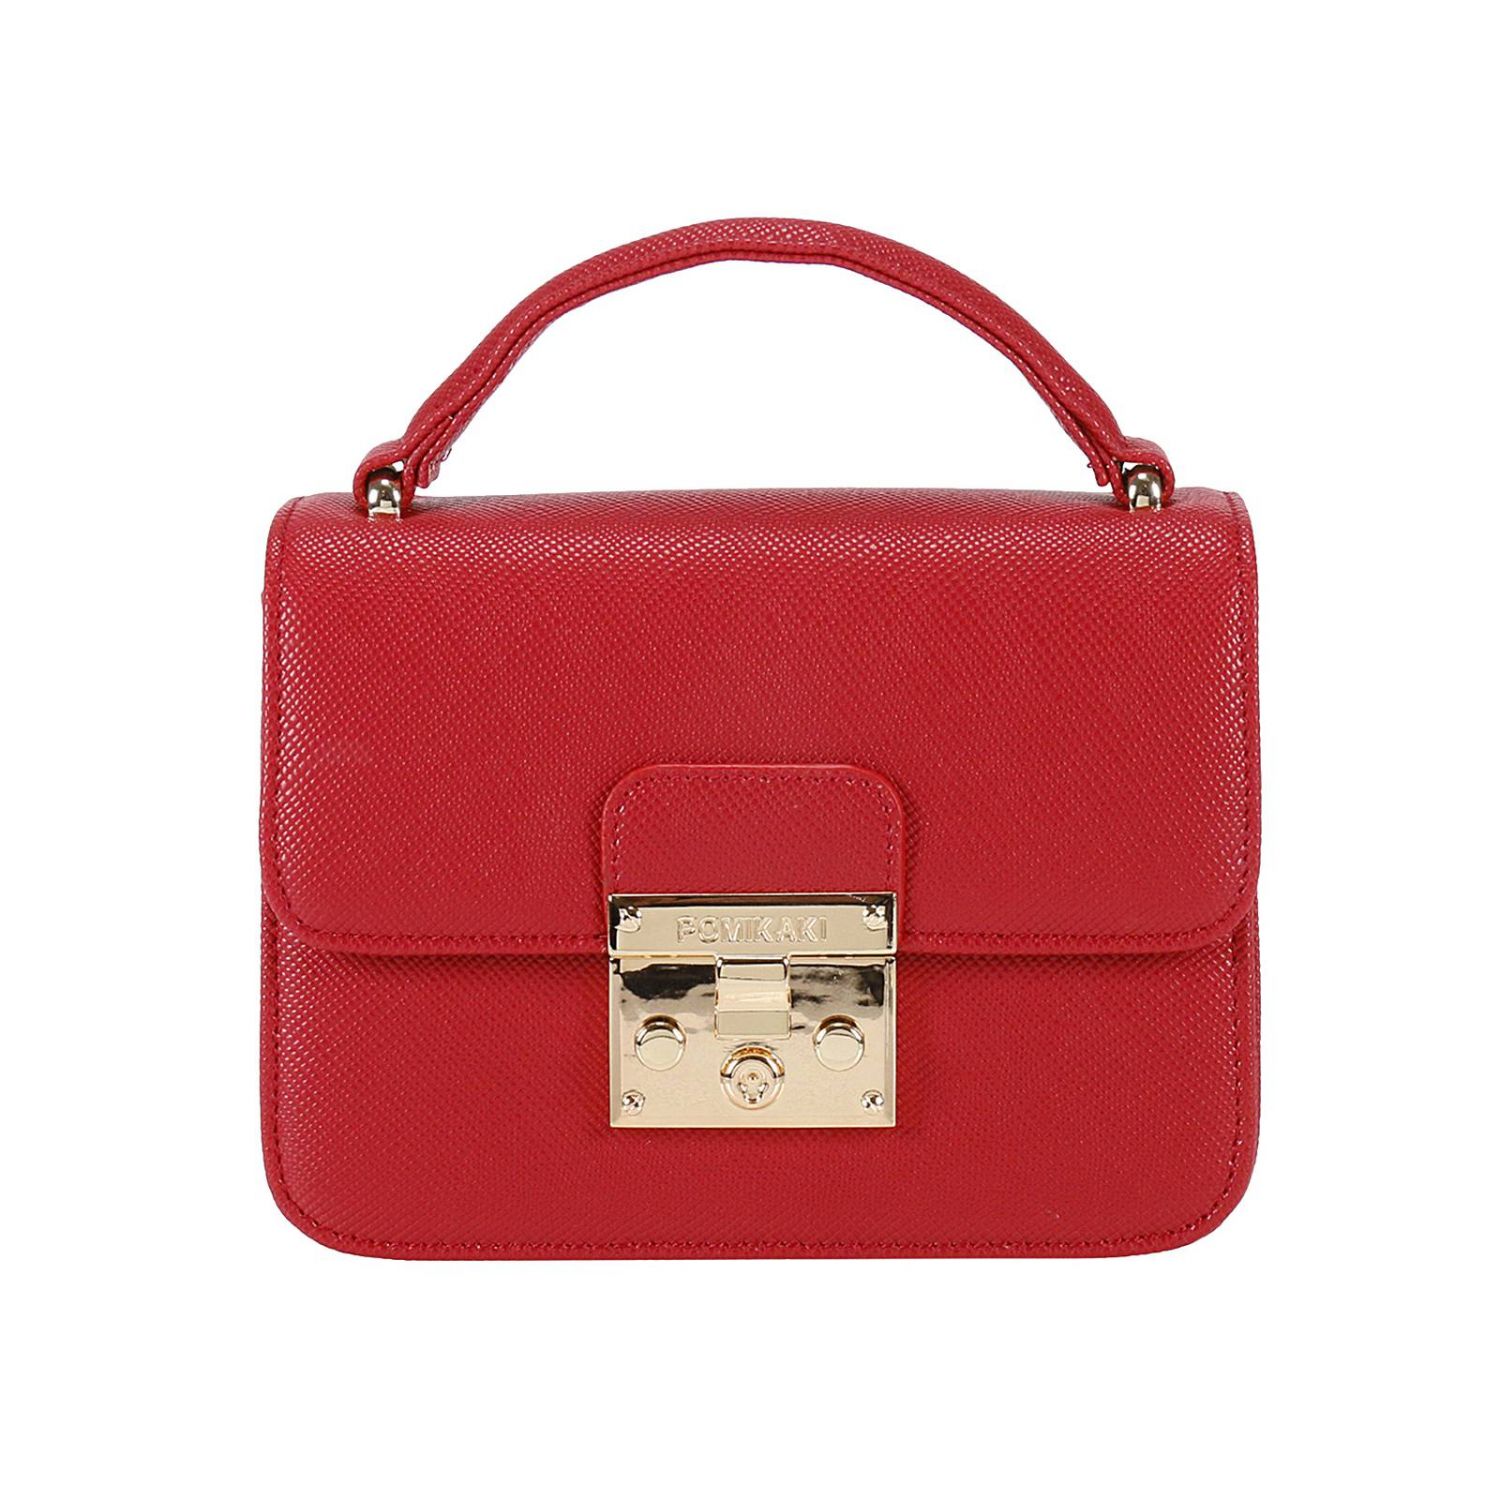 Pomikaki Outlet: Handbag women | Handbag Pomikaki Women Red | Handbag ...